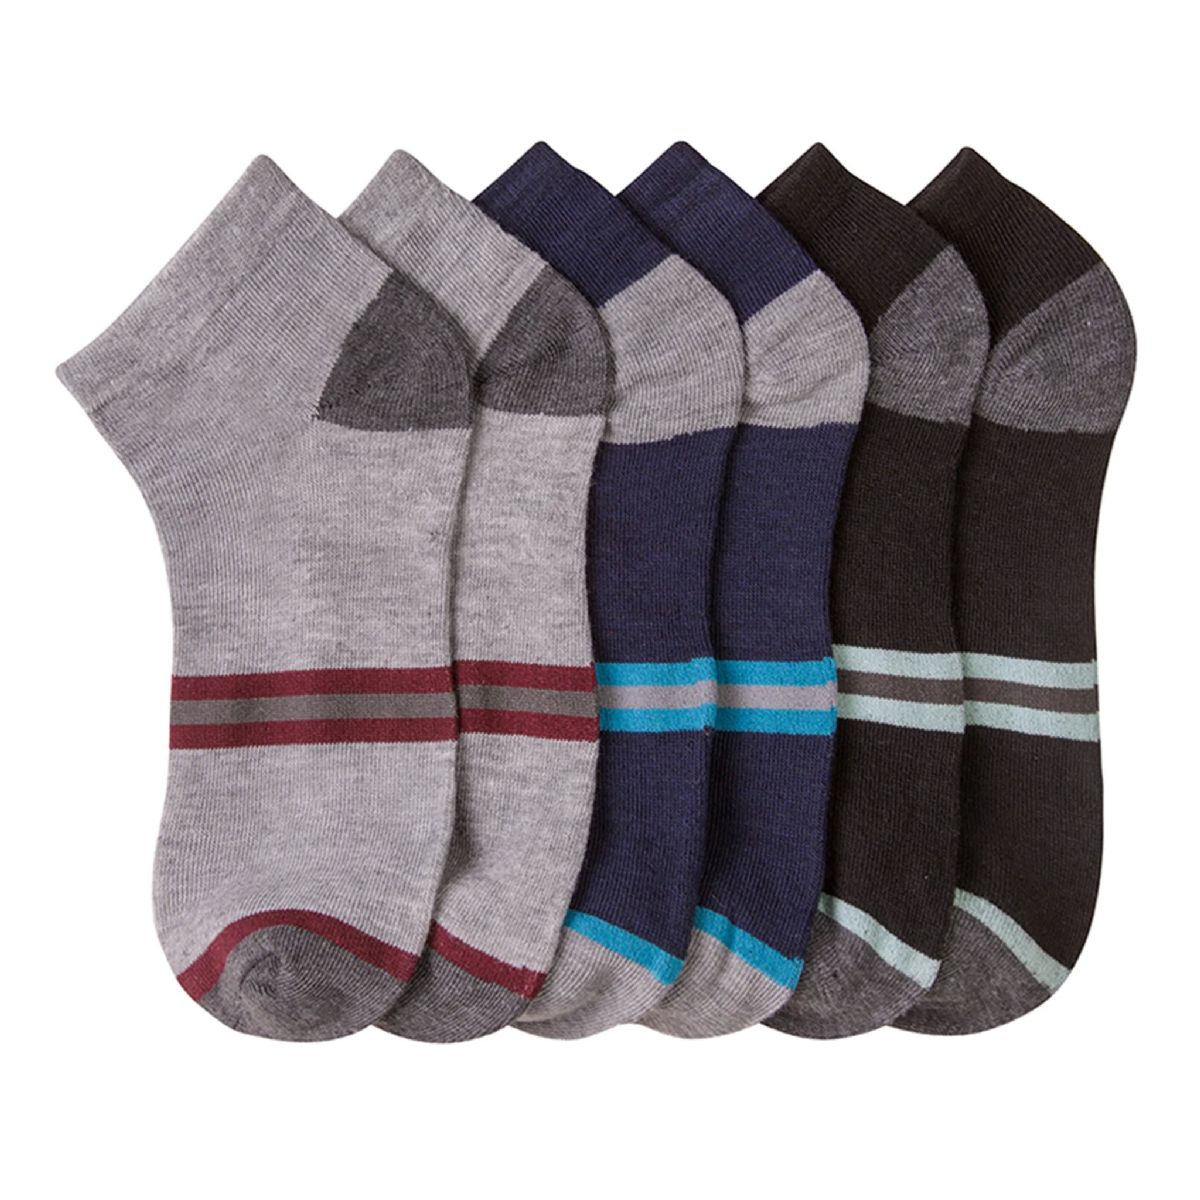 432 Pairs of Boys Ankle Sock Multi Color Design Size 6-8 Power Club Spandex Socks (spirit)